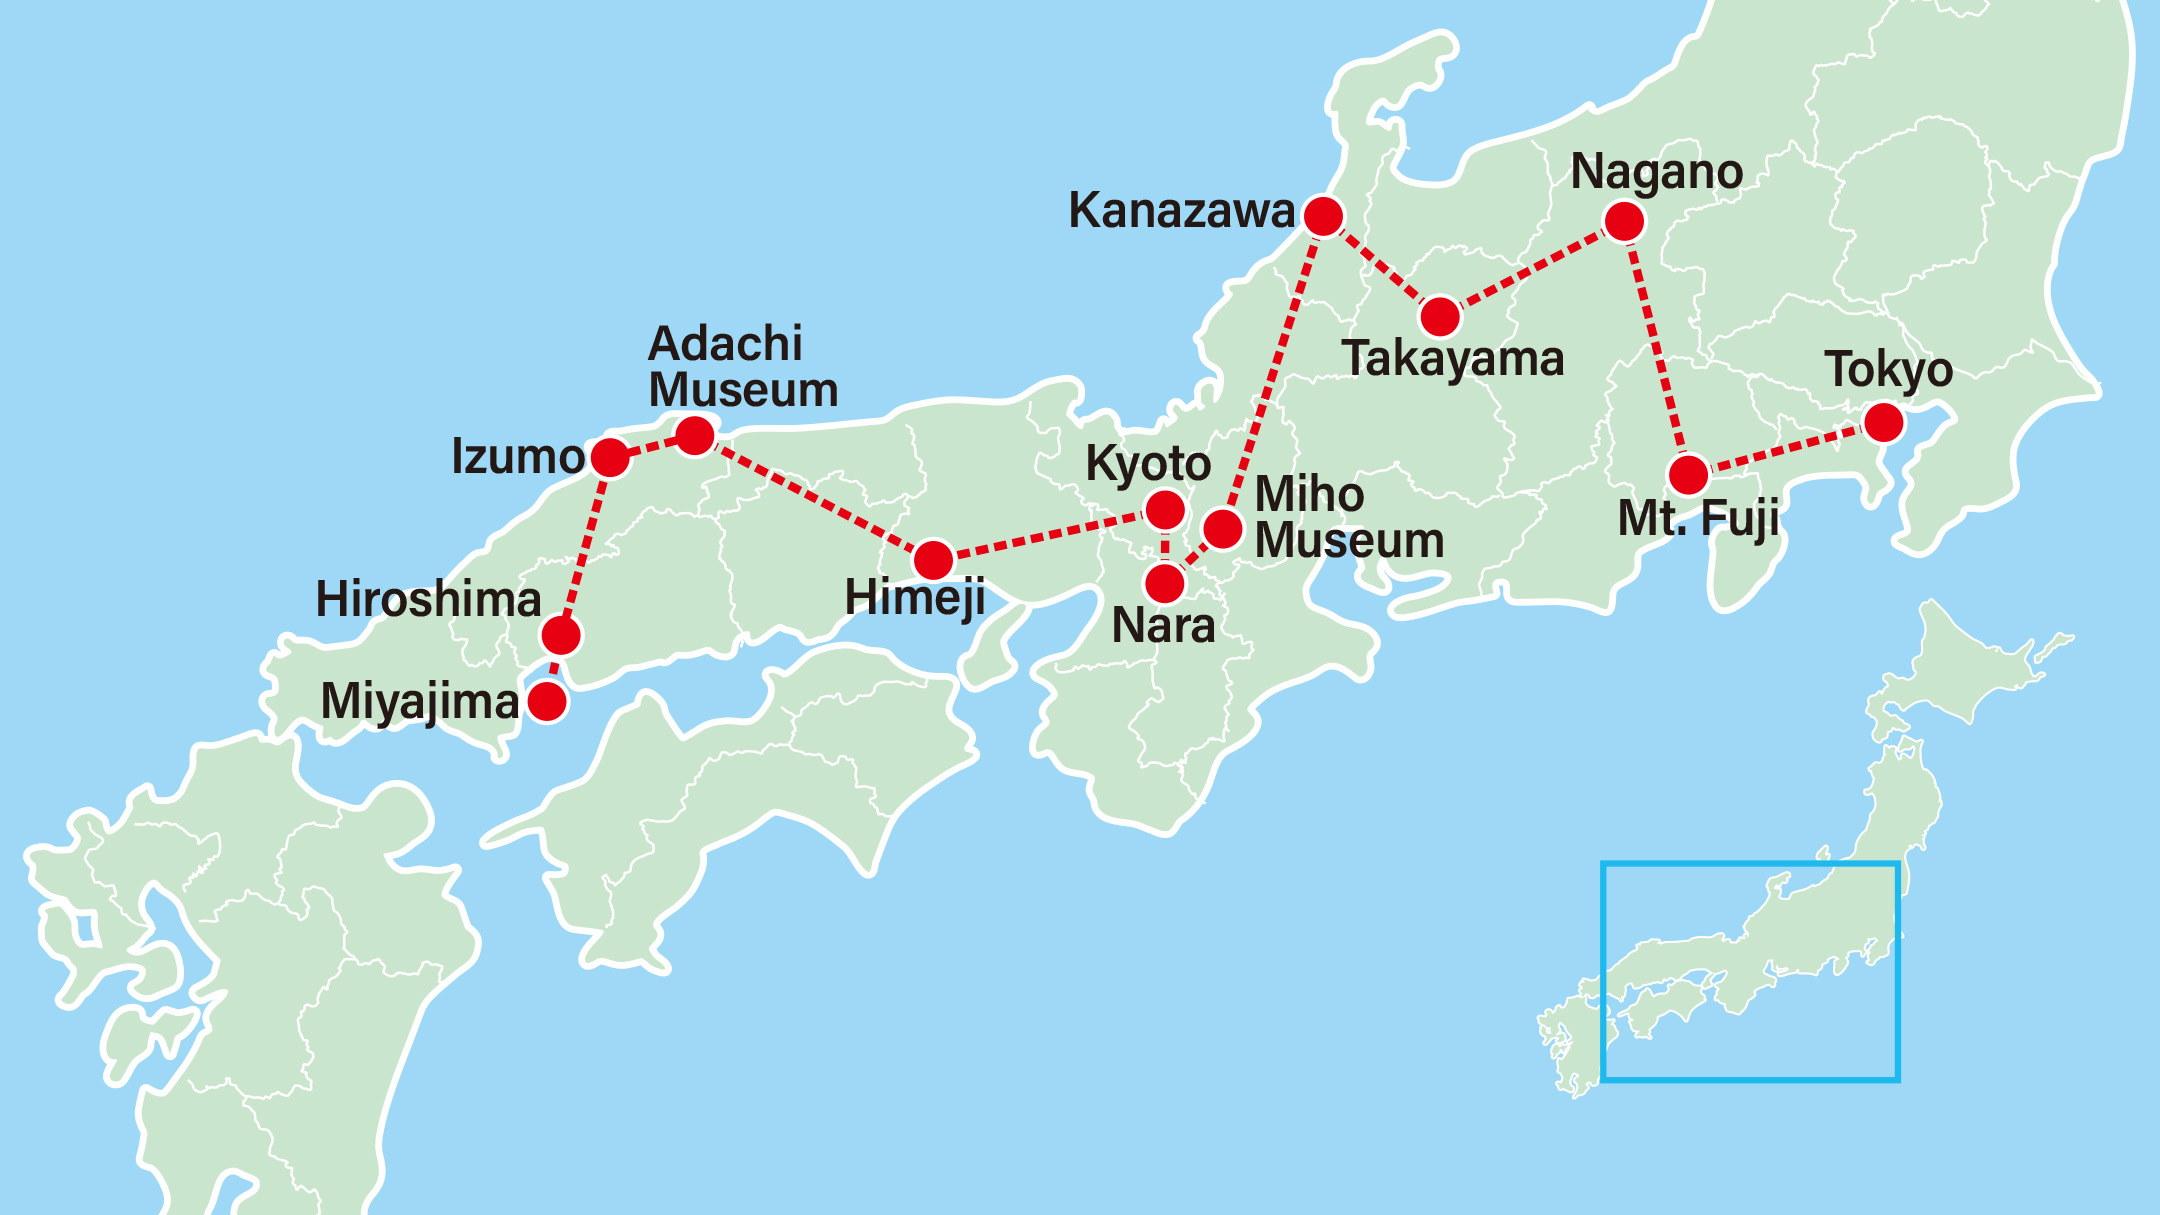 Takayama | Anime & Hiroshima 12 Days-Tokyo-Lake Kawaguchi-Nagano-Takayama-Kanazawa-Miho Museum-Nara-Kyoto-Himeji-Shimane-Hiroshima-Miyajima